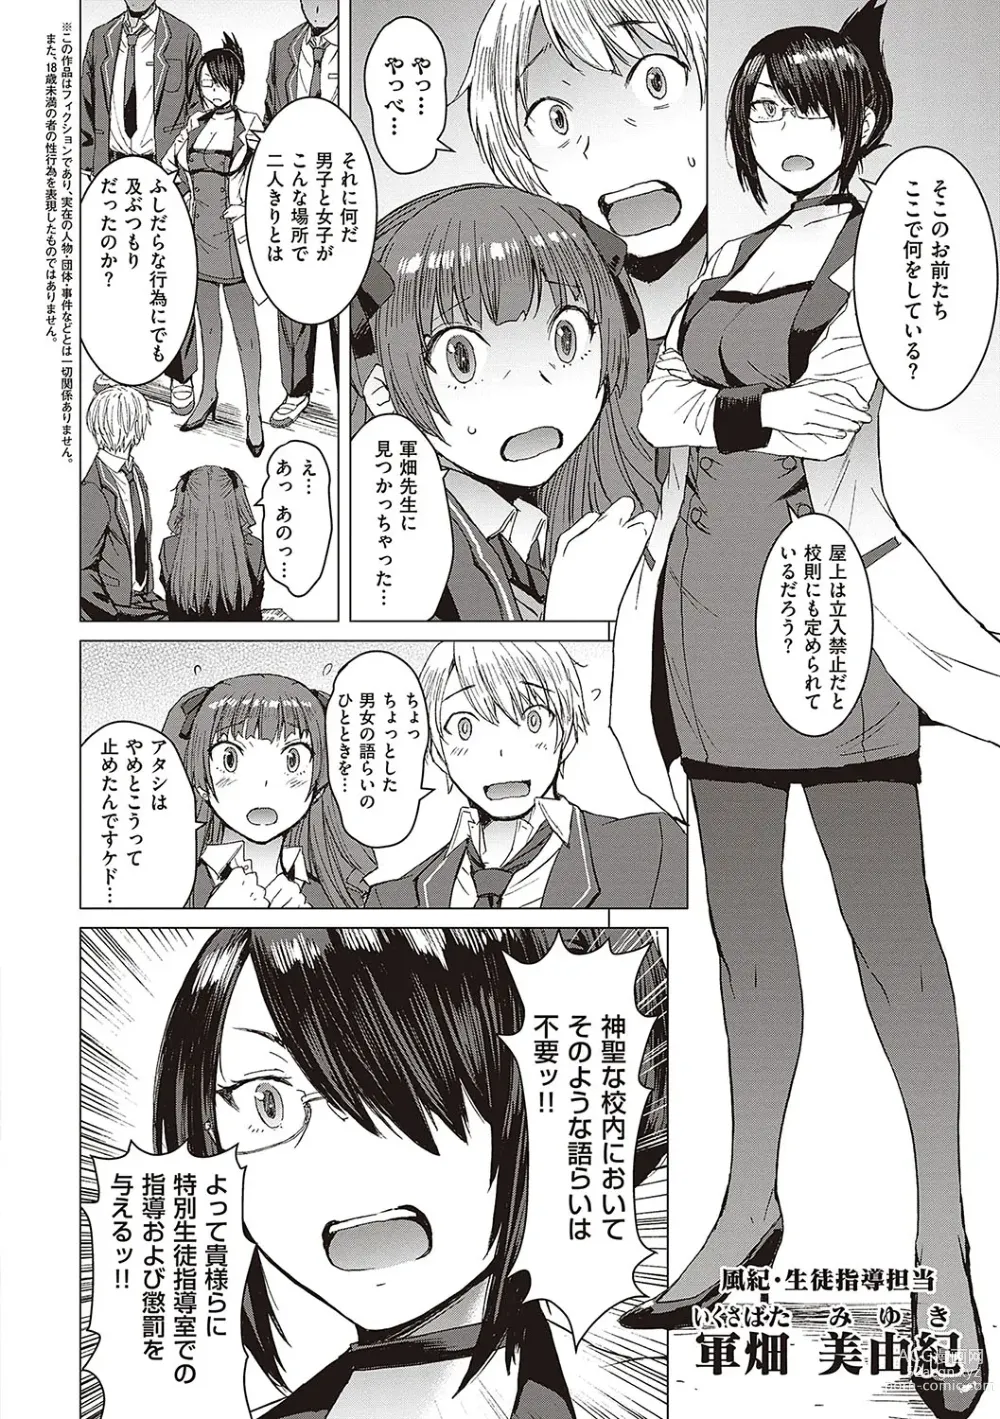 Page 7 of manga Youkoso Choubatsu Koubi Heya e